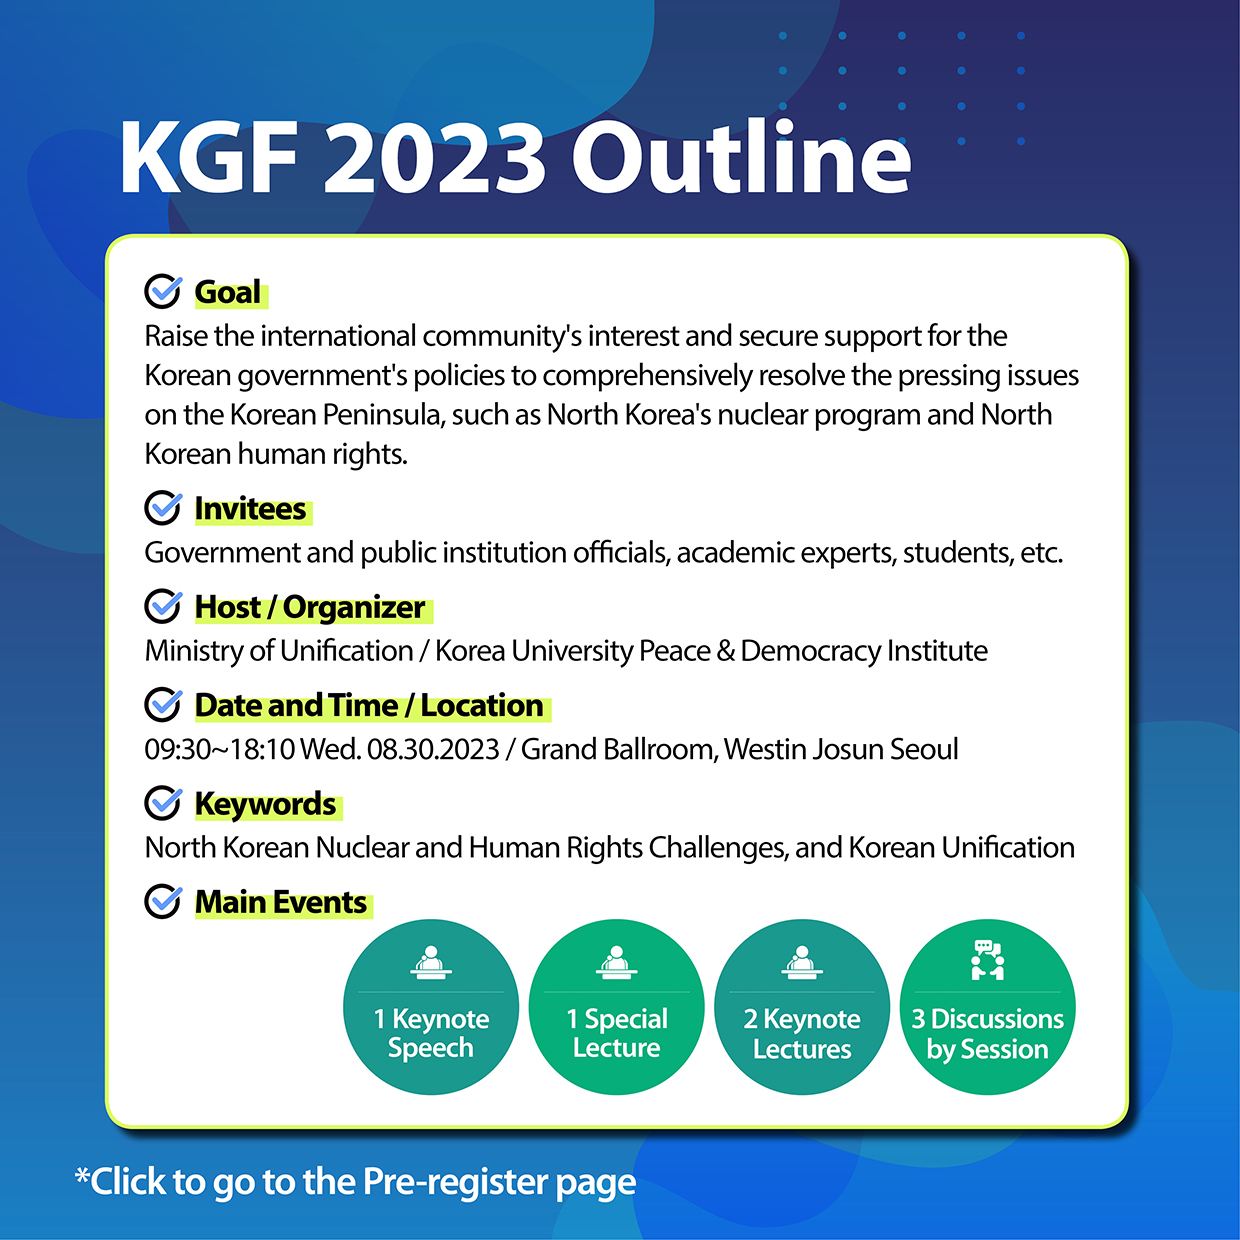 Korea Global Forum 2023